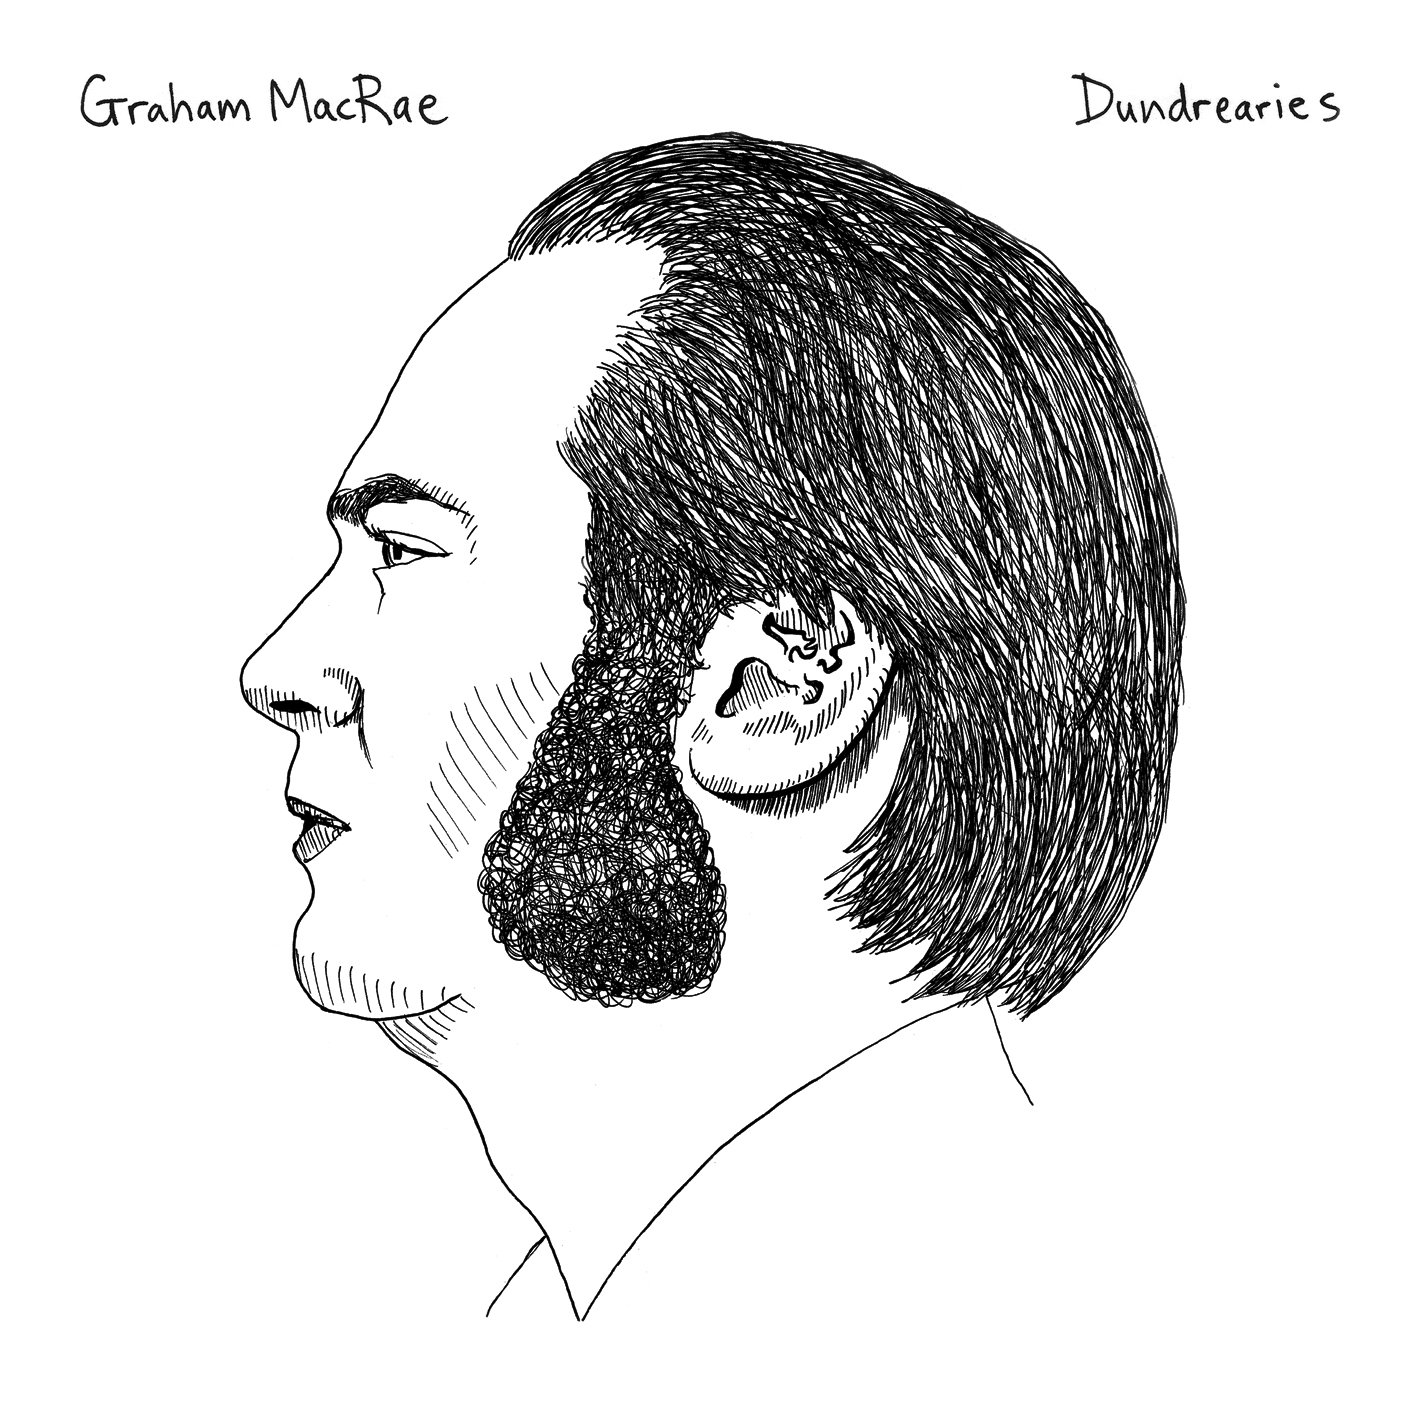 graham-macrae-dundrearies-cover